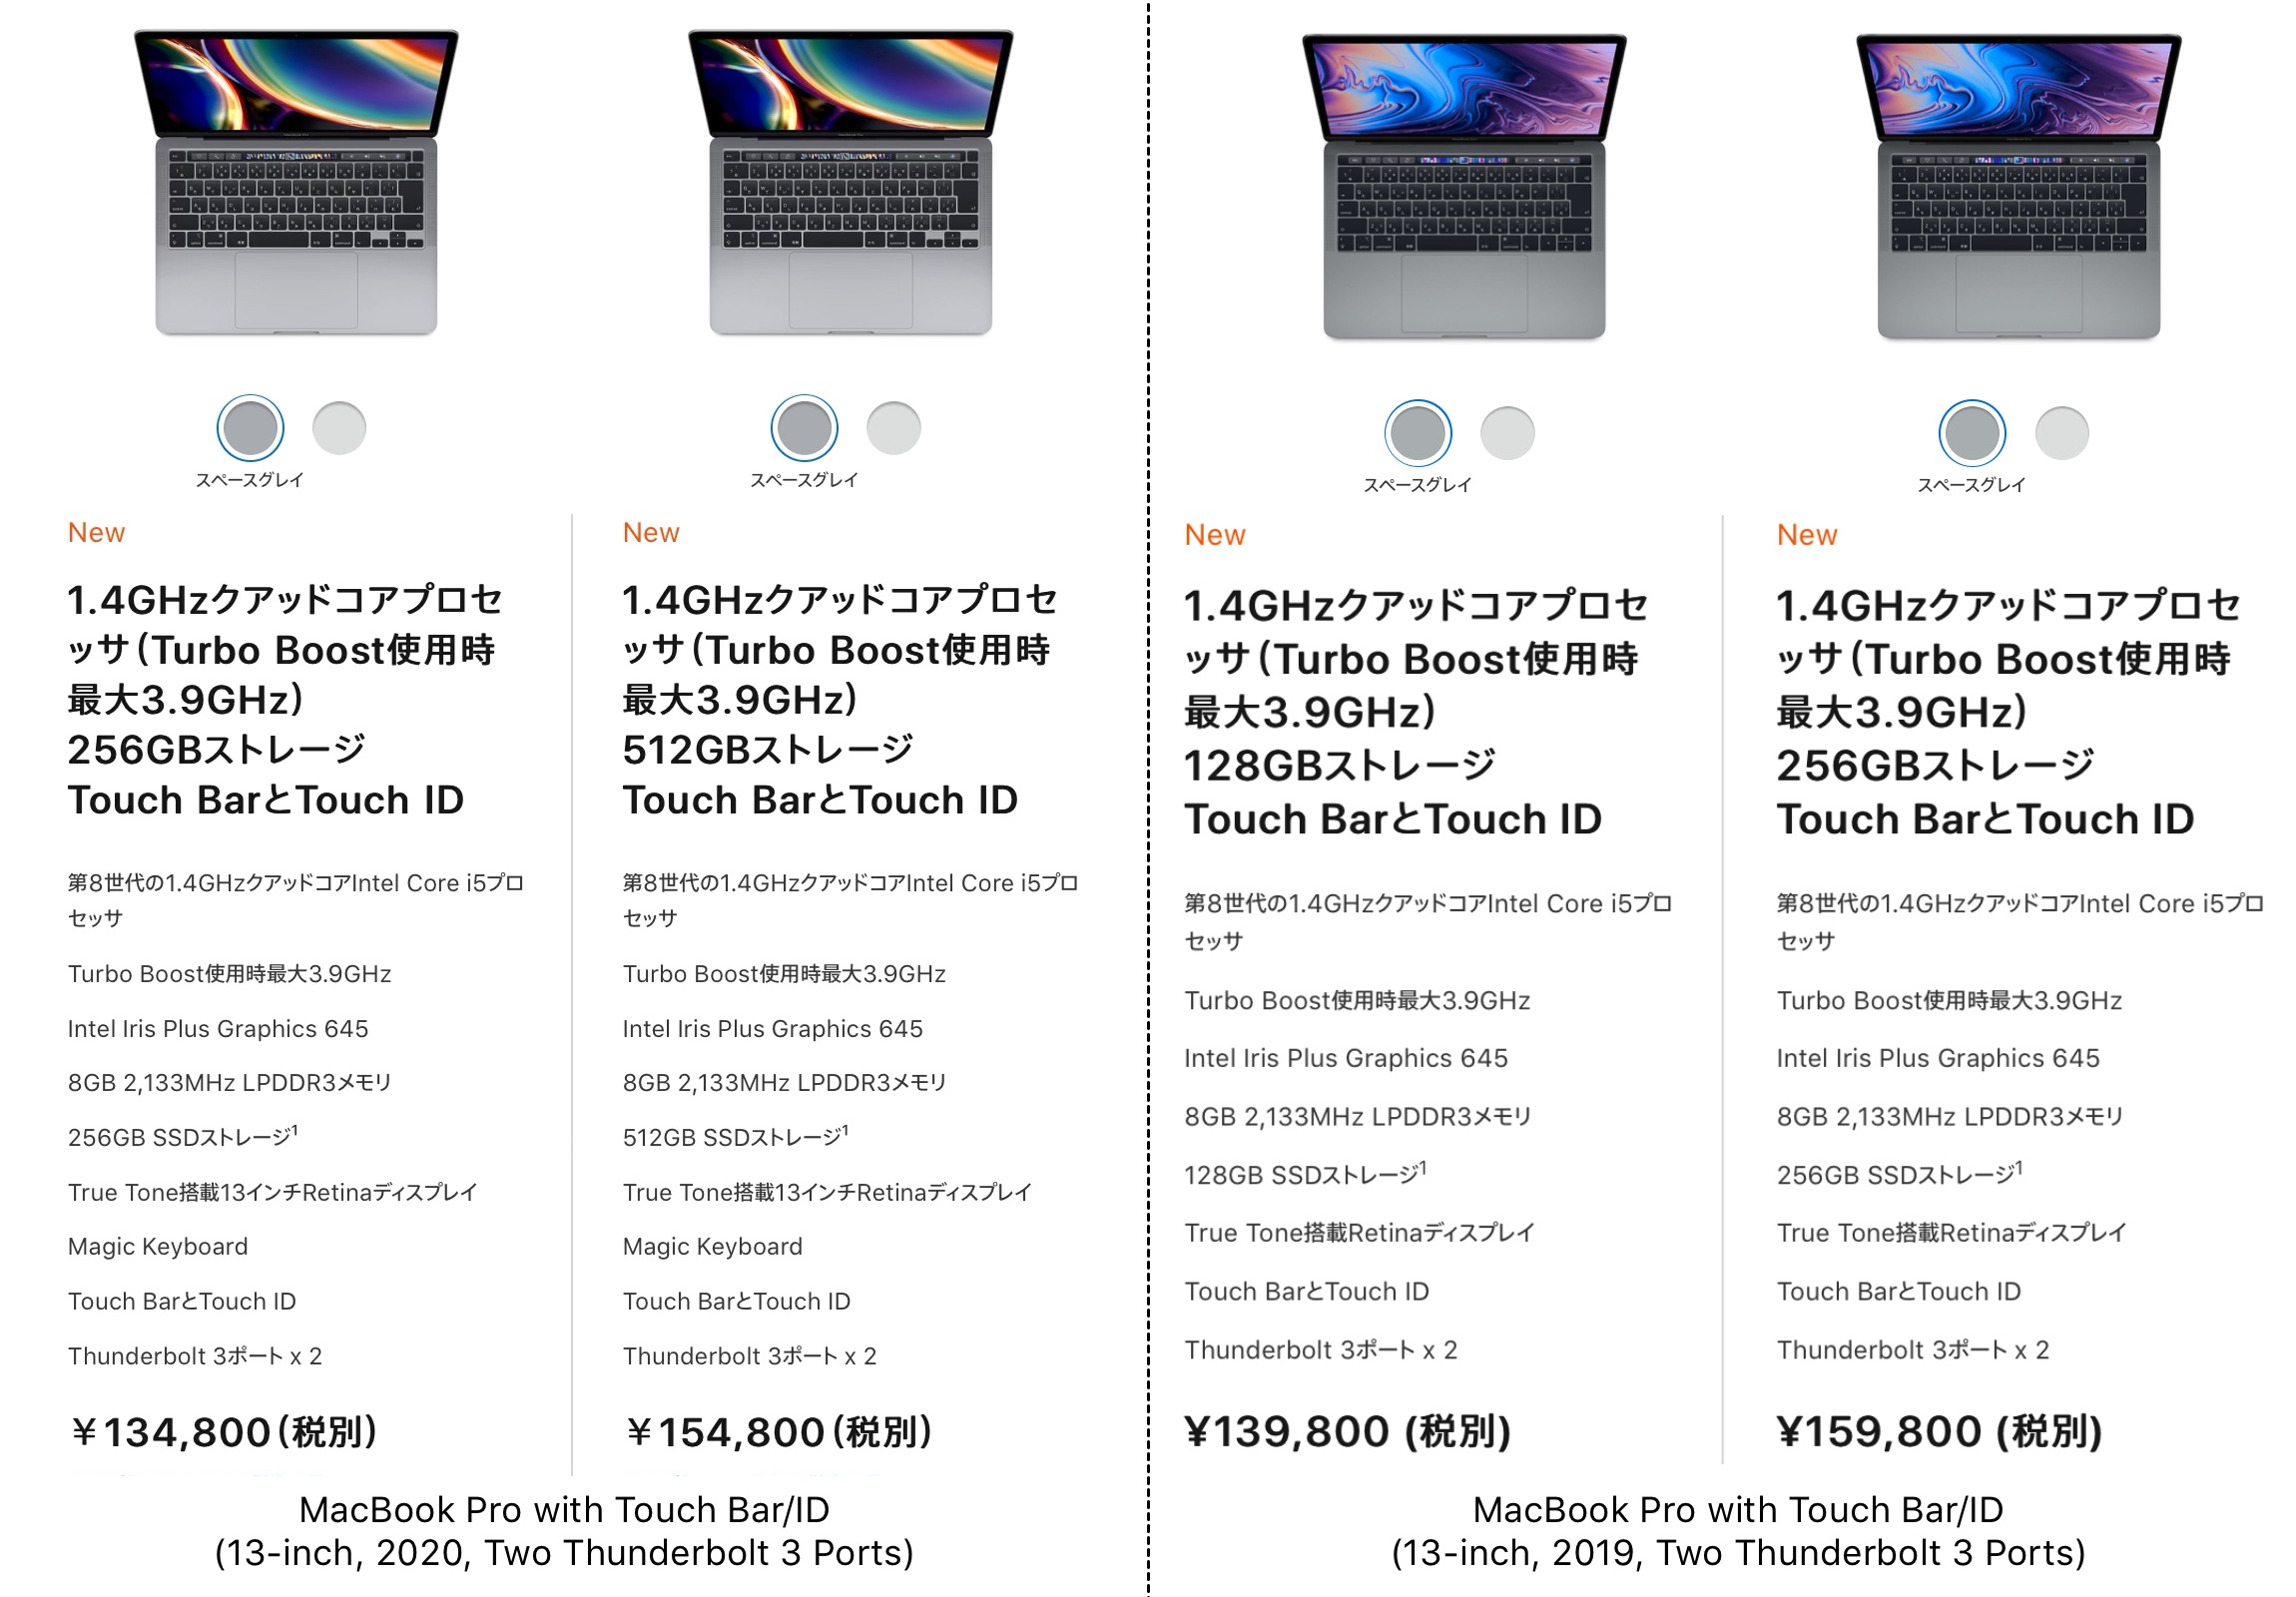 MacBook Pro (13-inch, 2020)とMacBook Pro (13-inch, 2019)